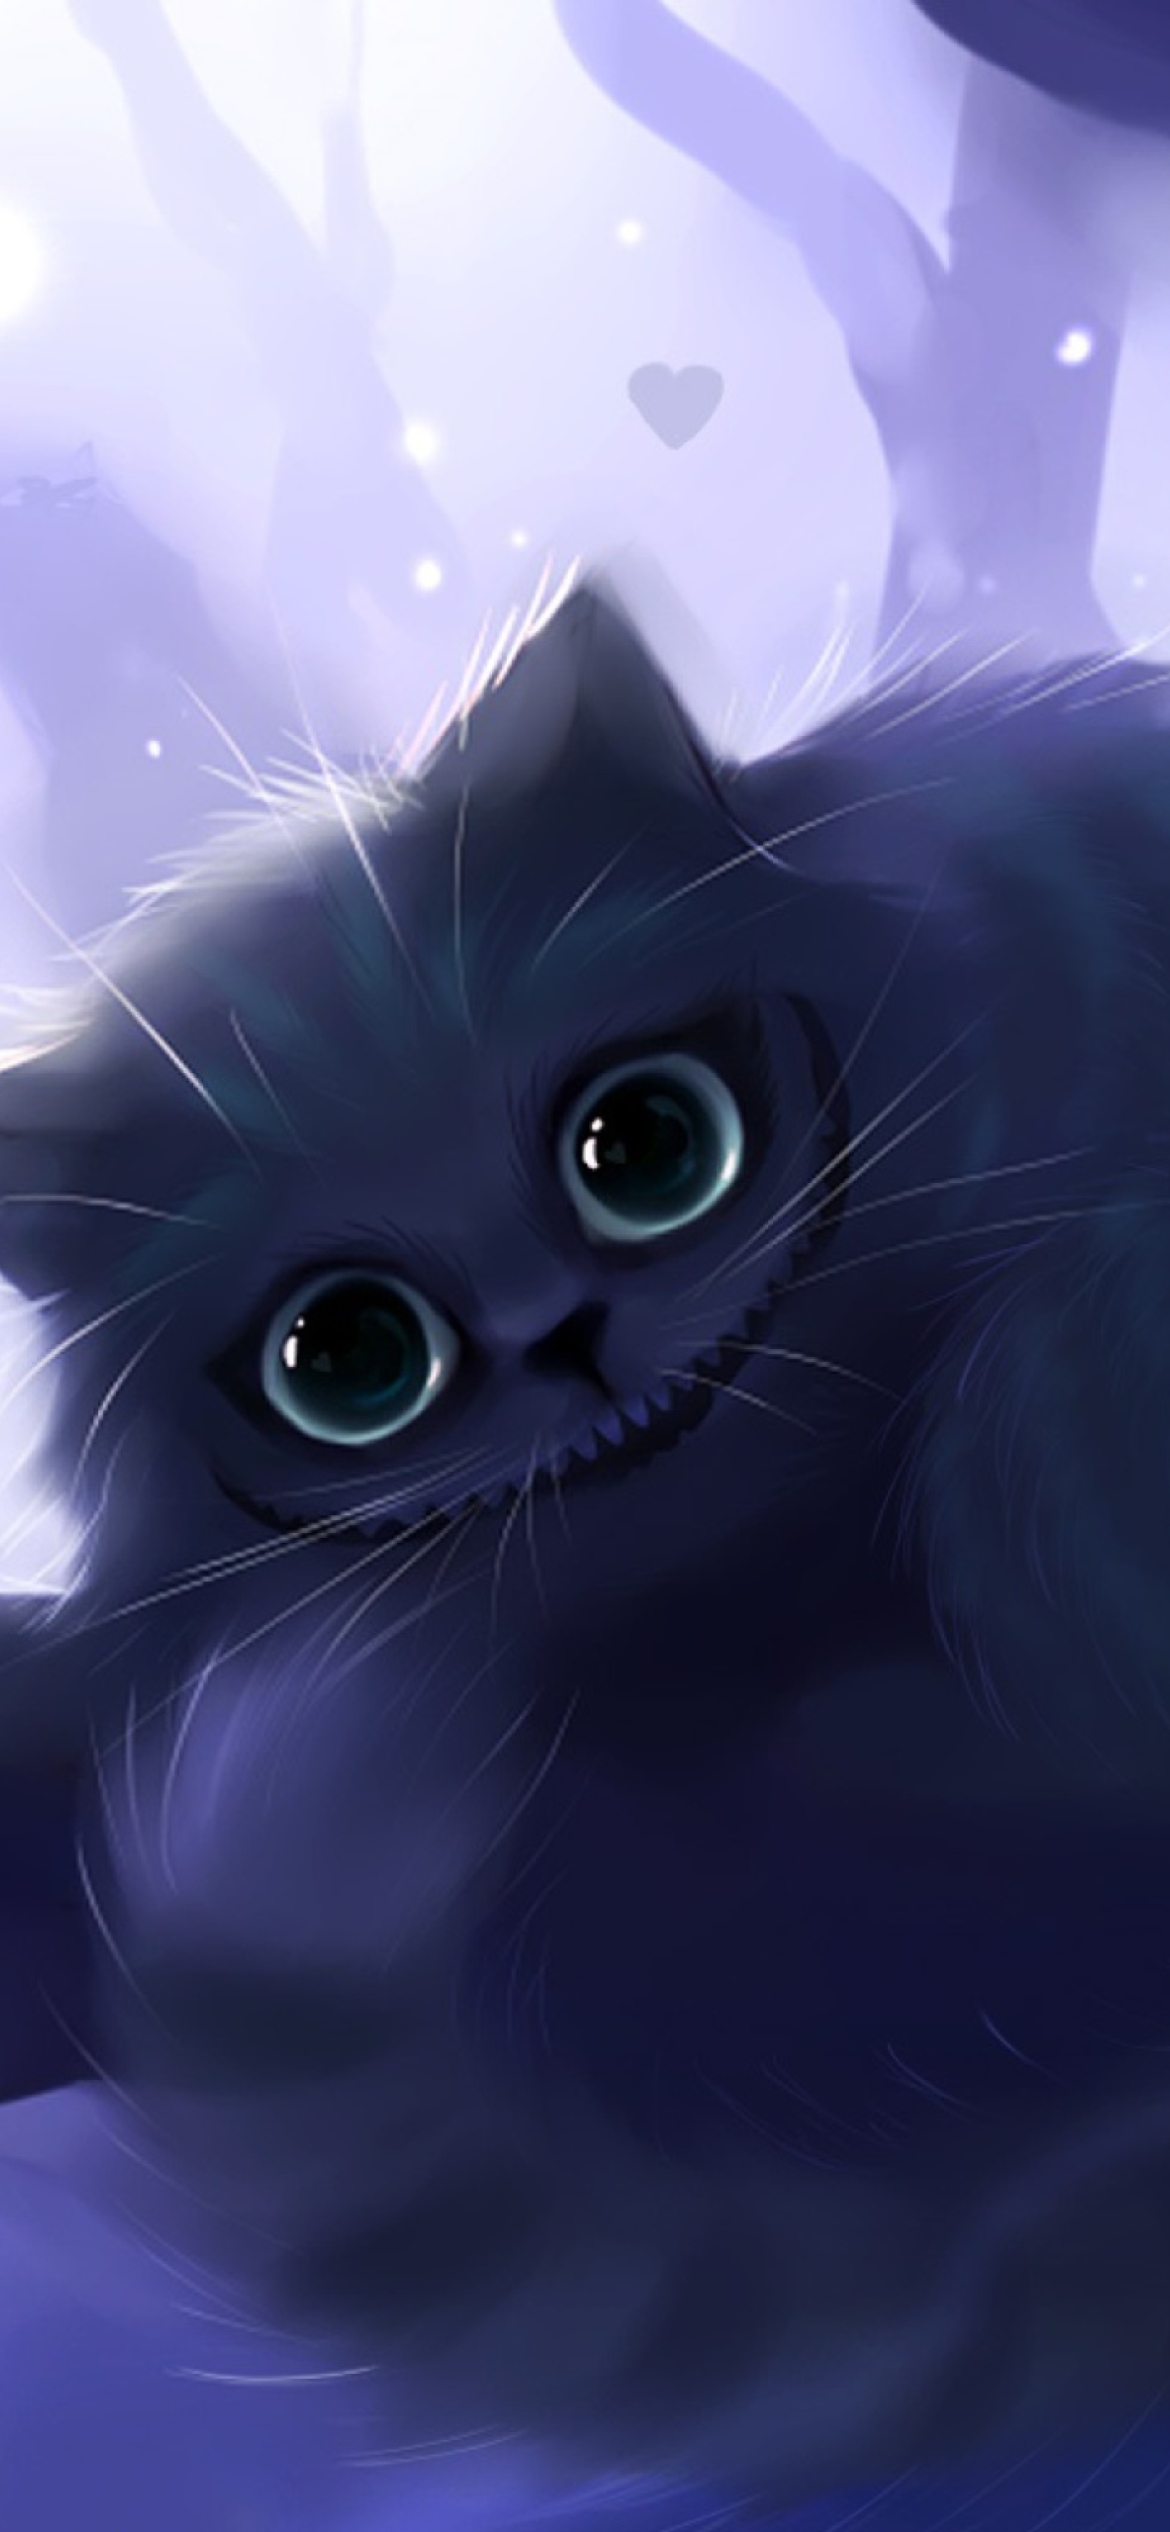 Premium AI Image  Cute cartoon cat with a big smile